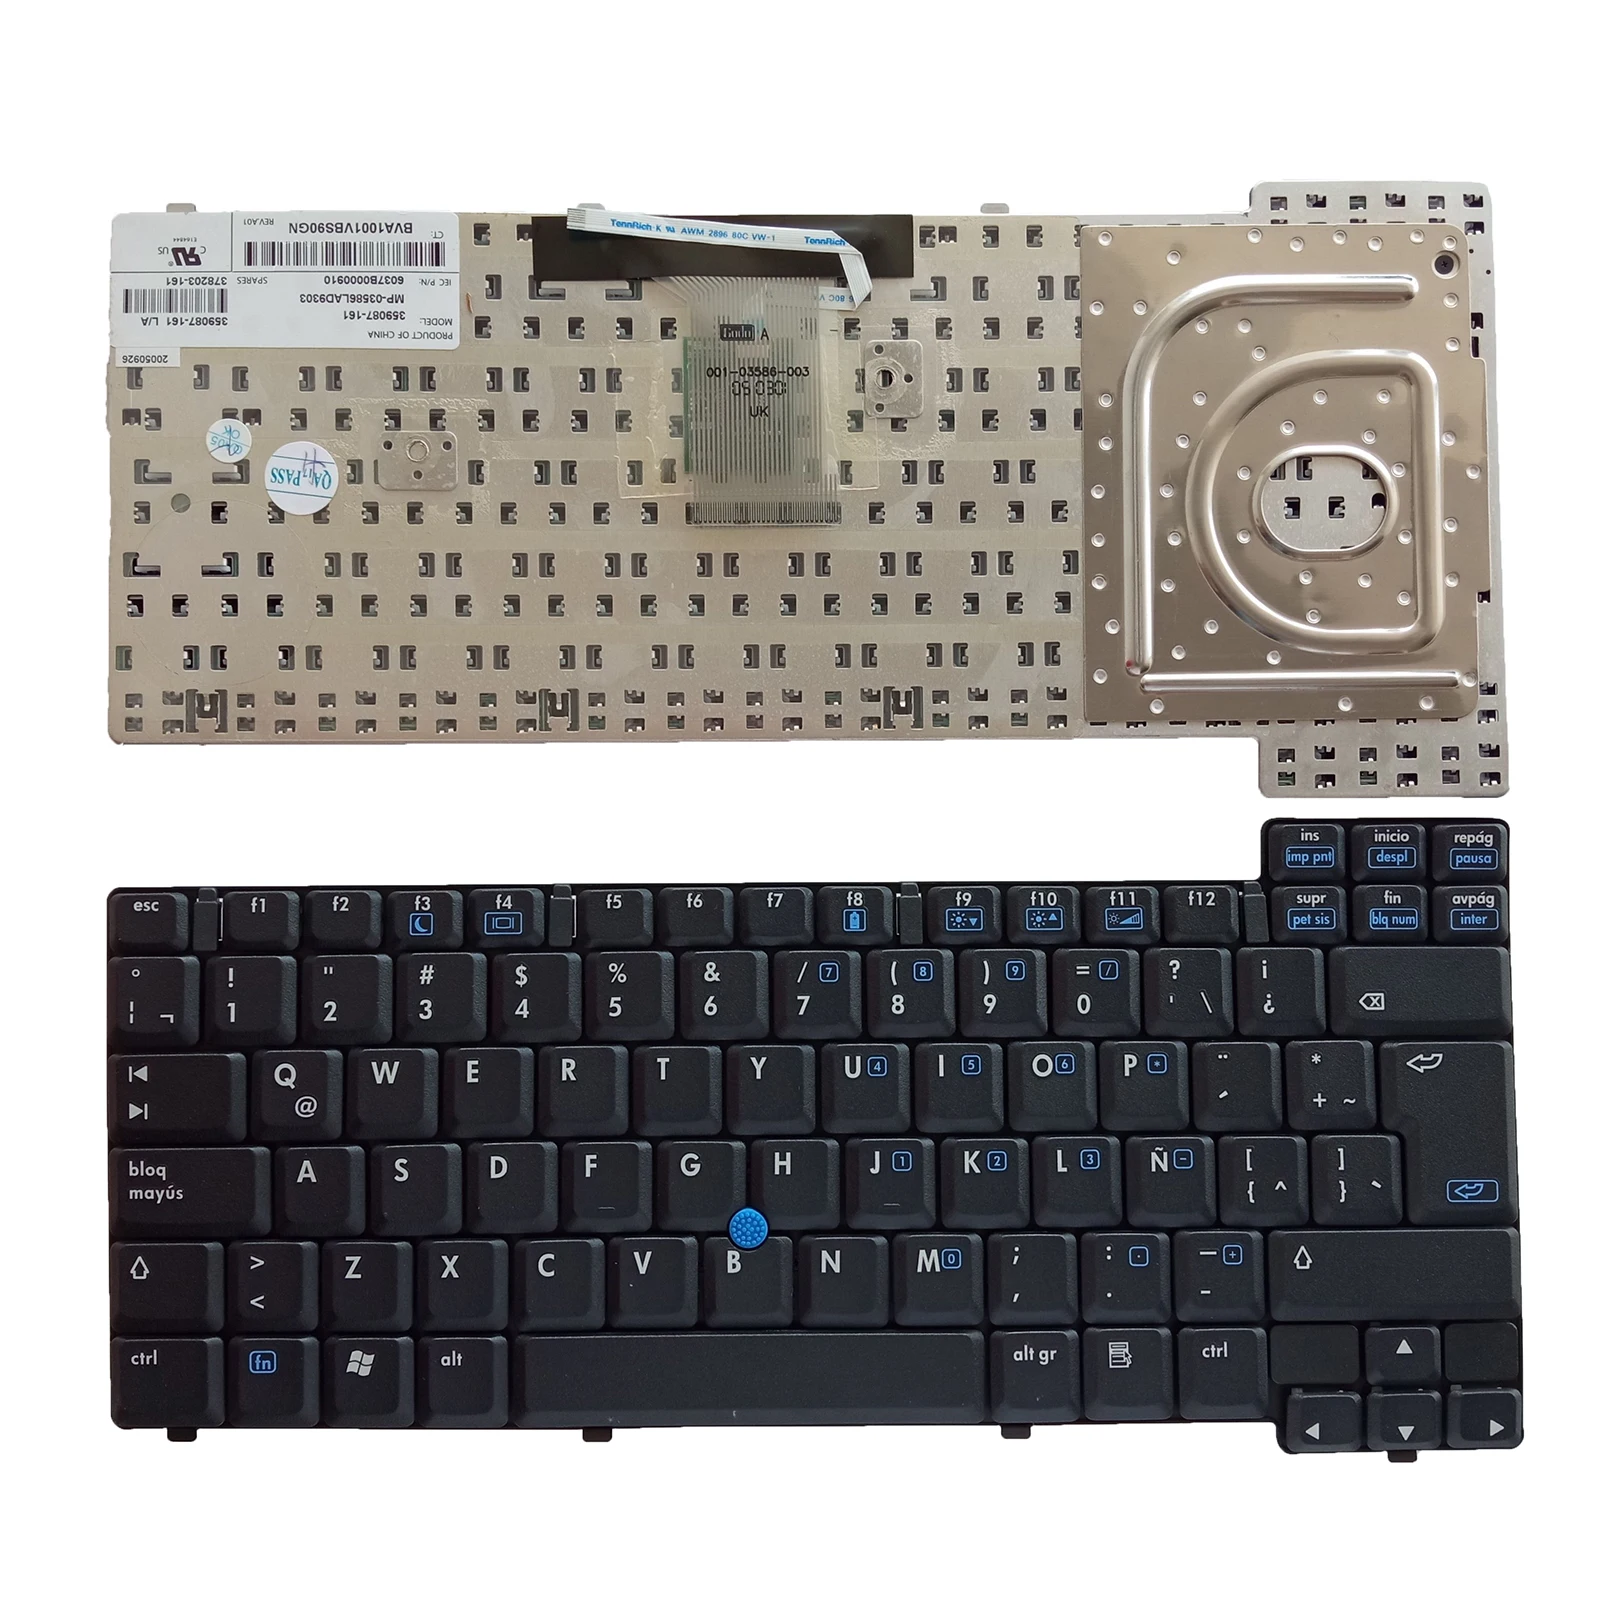 

Shen Zhen горячая Распродажа Новая клавиатура для ноутбука HP NC8200 NC8220 NC8230 NC8400 NC8430 NC8440